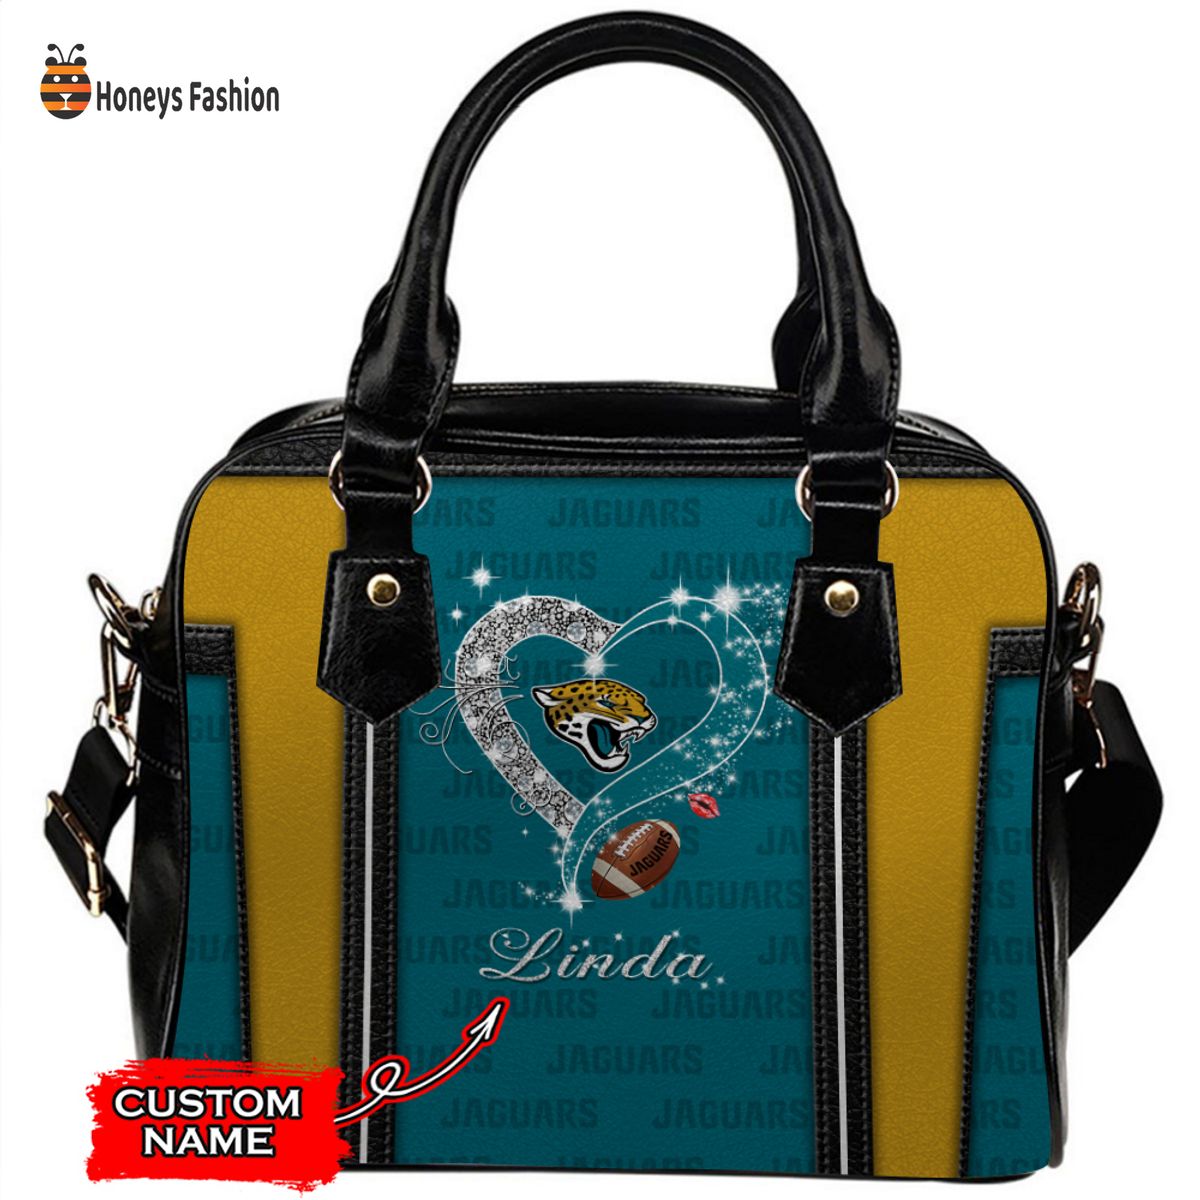 Jacksonville Jaguars NFL Custom Name Leather Handbag Tote bag